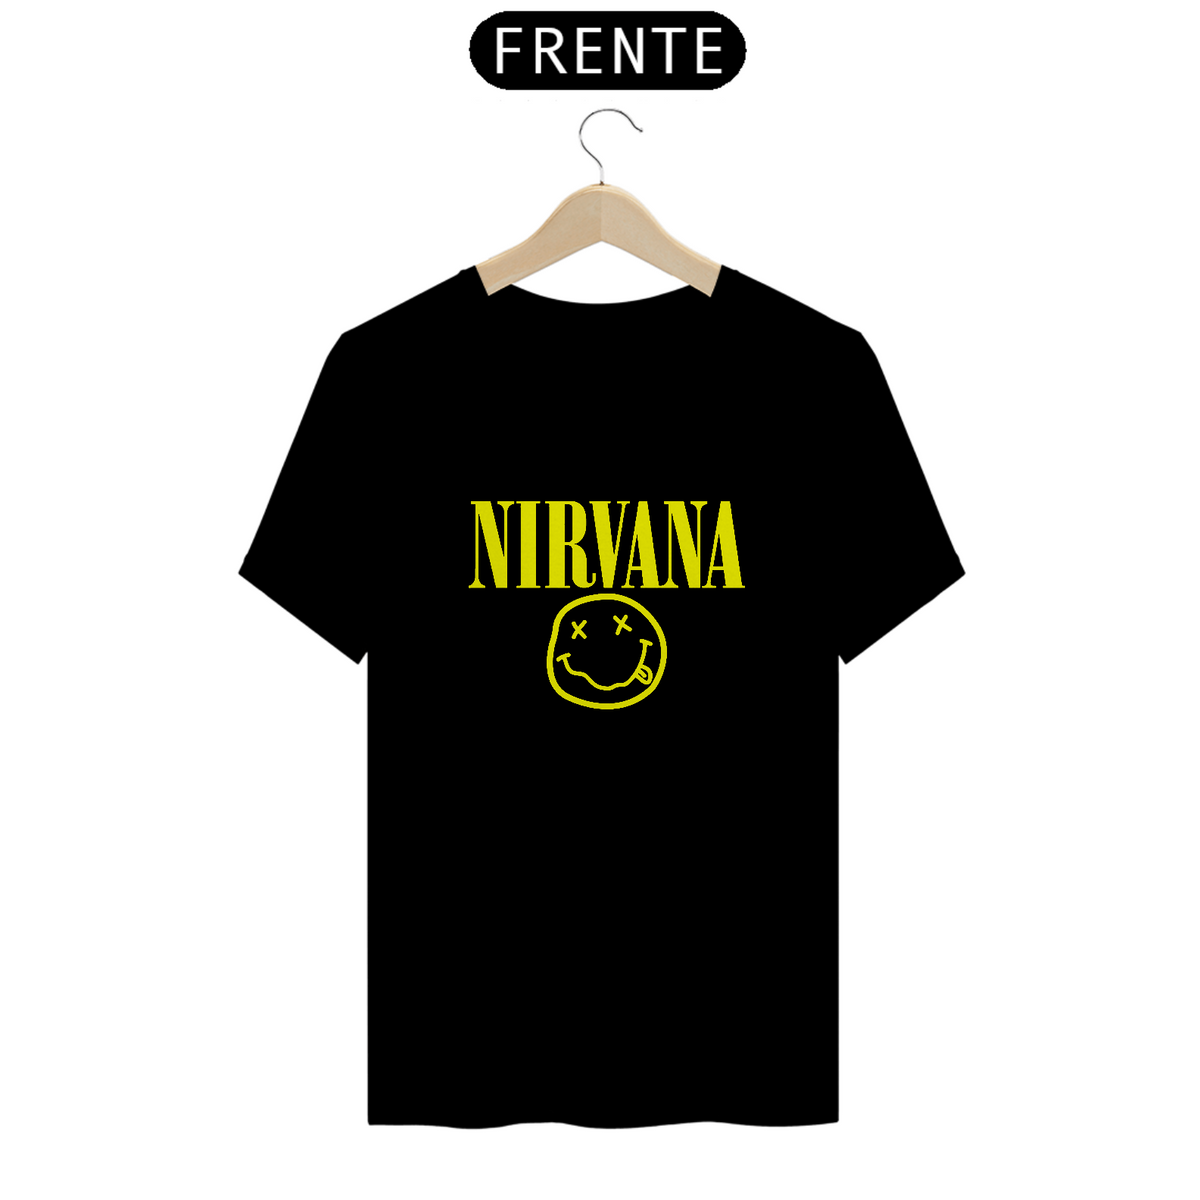 Nome do produto: Nirvana